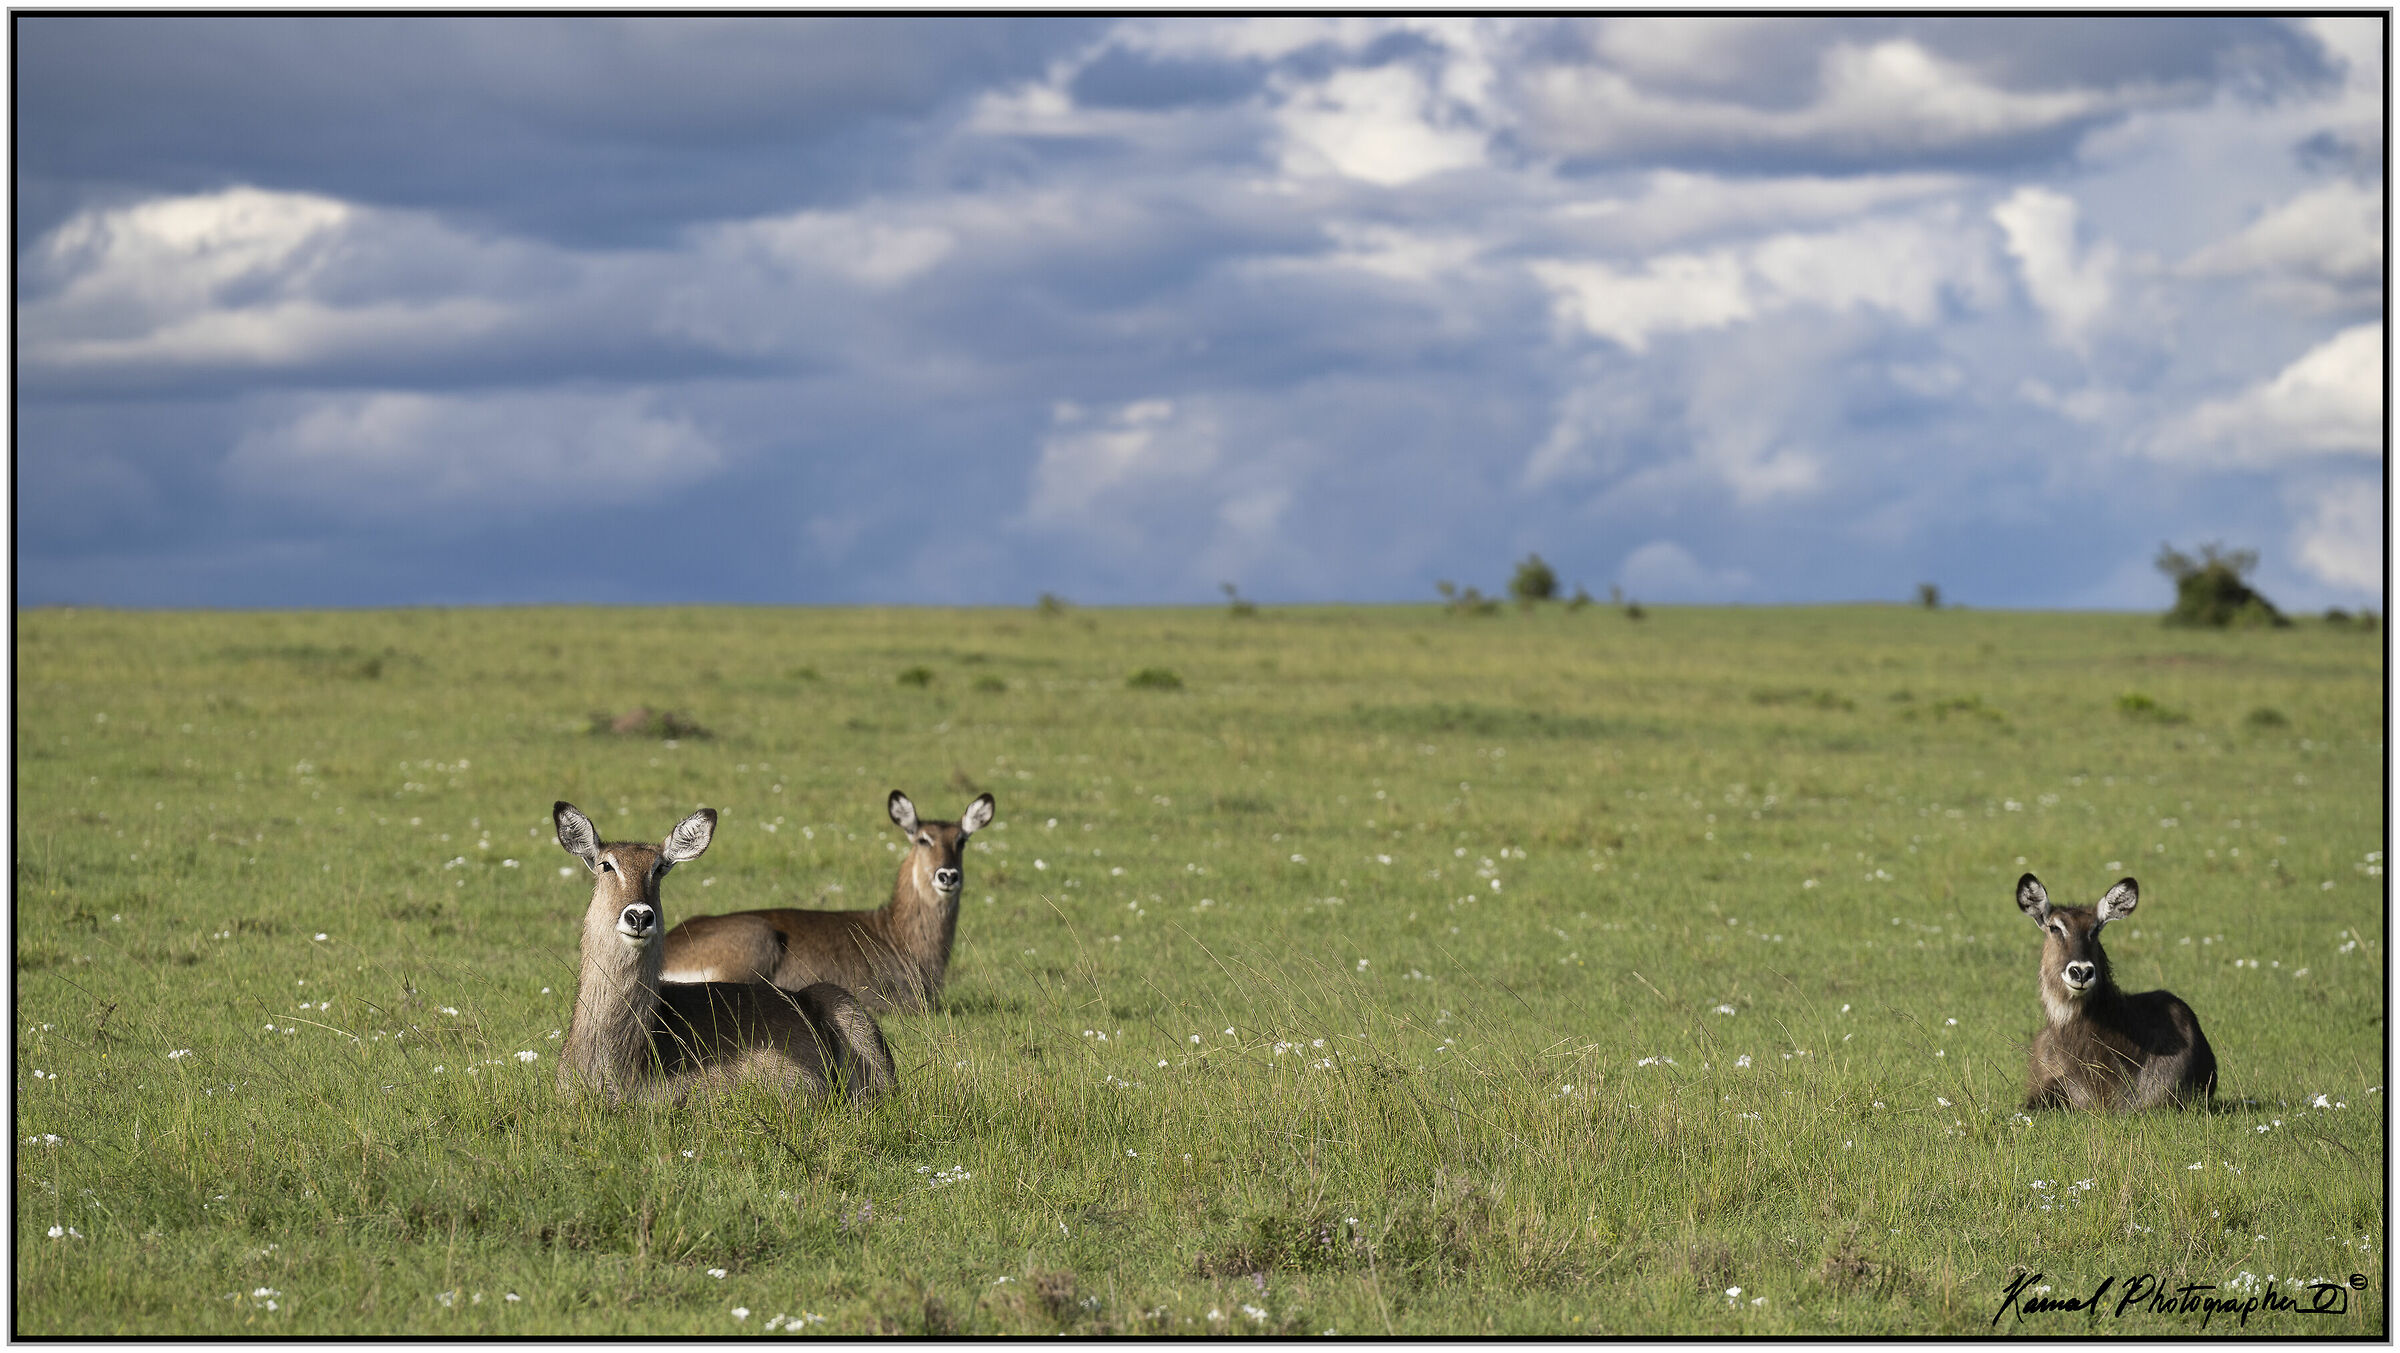 Water Antelope (Kobus ellipsiprymnus)...